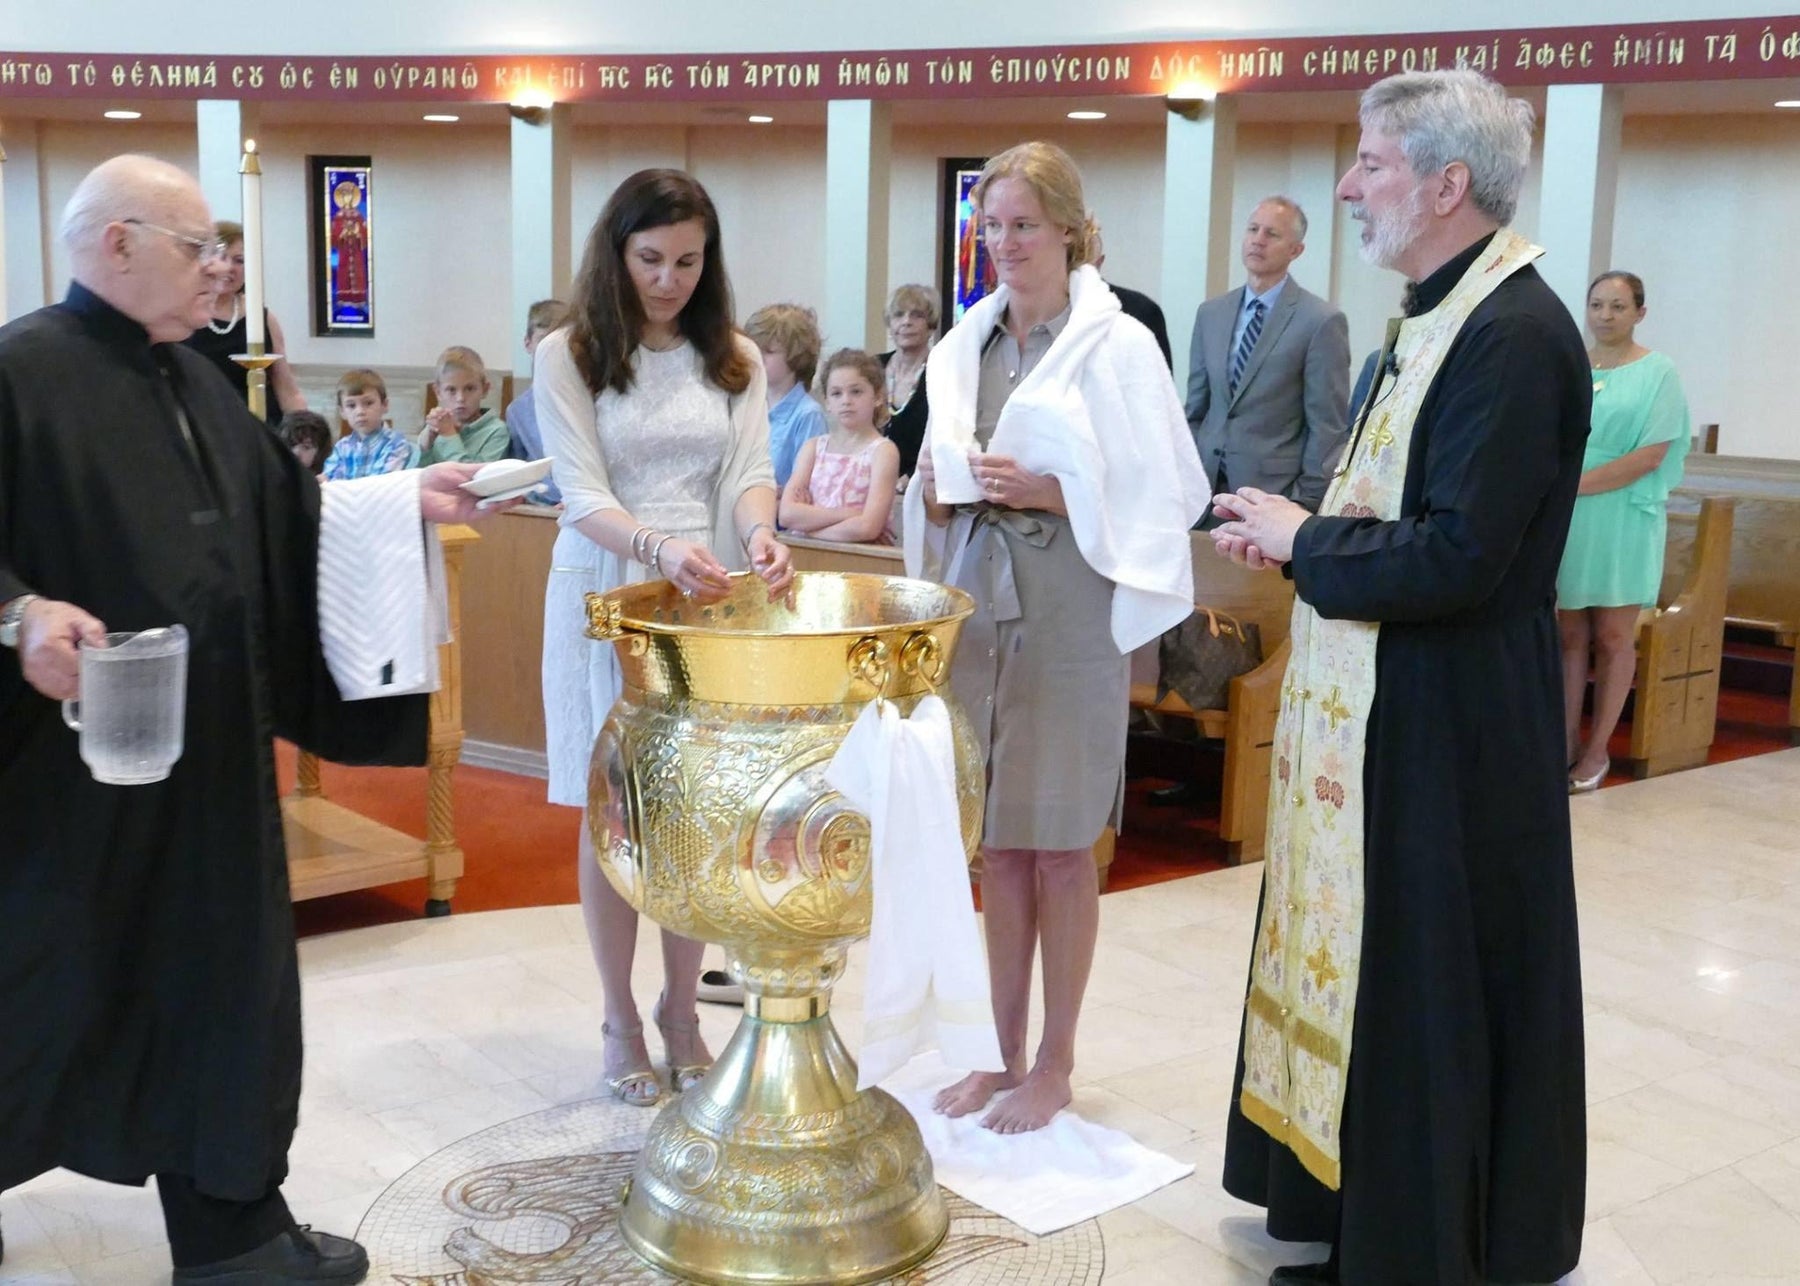 An Adult Orthodox Baptism